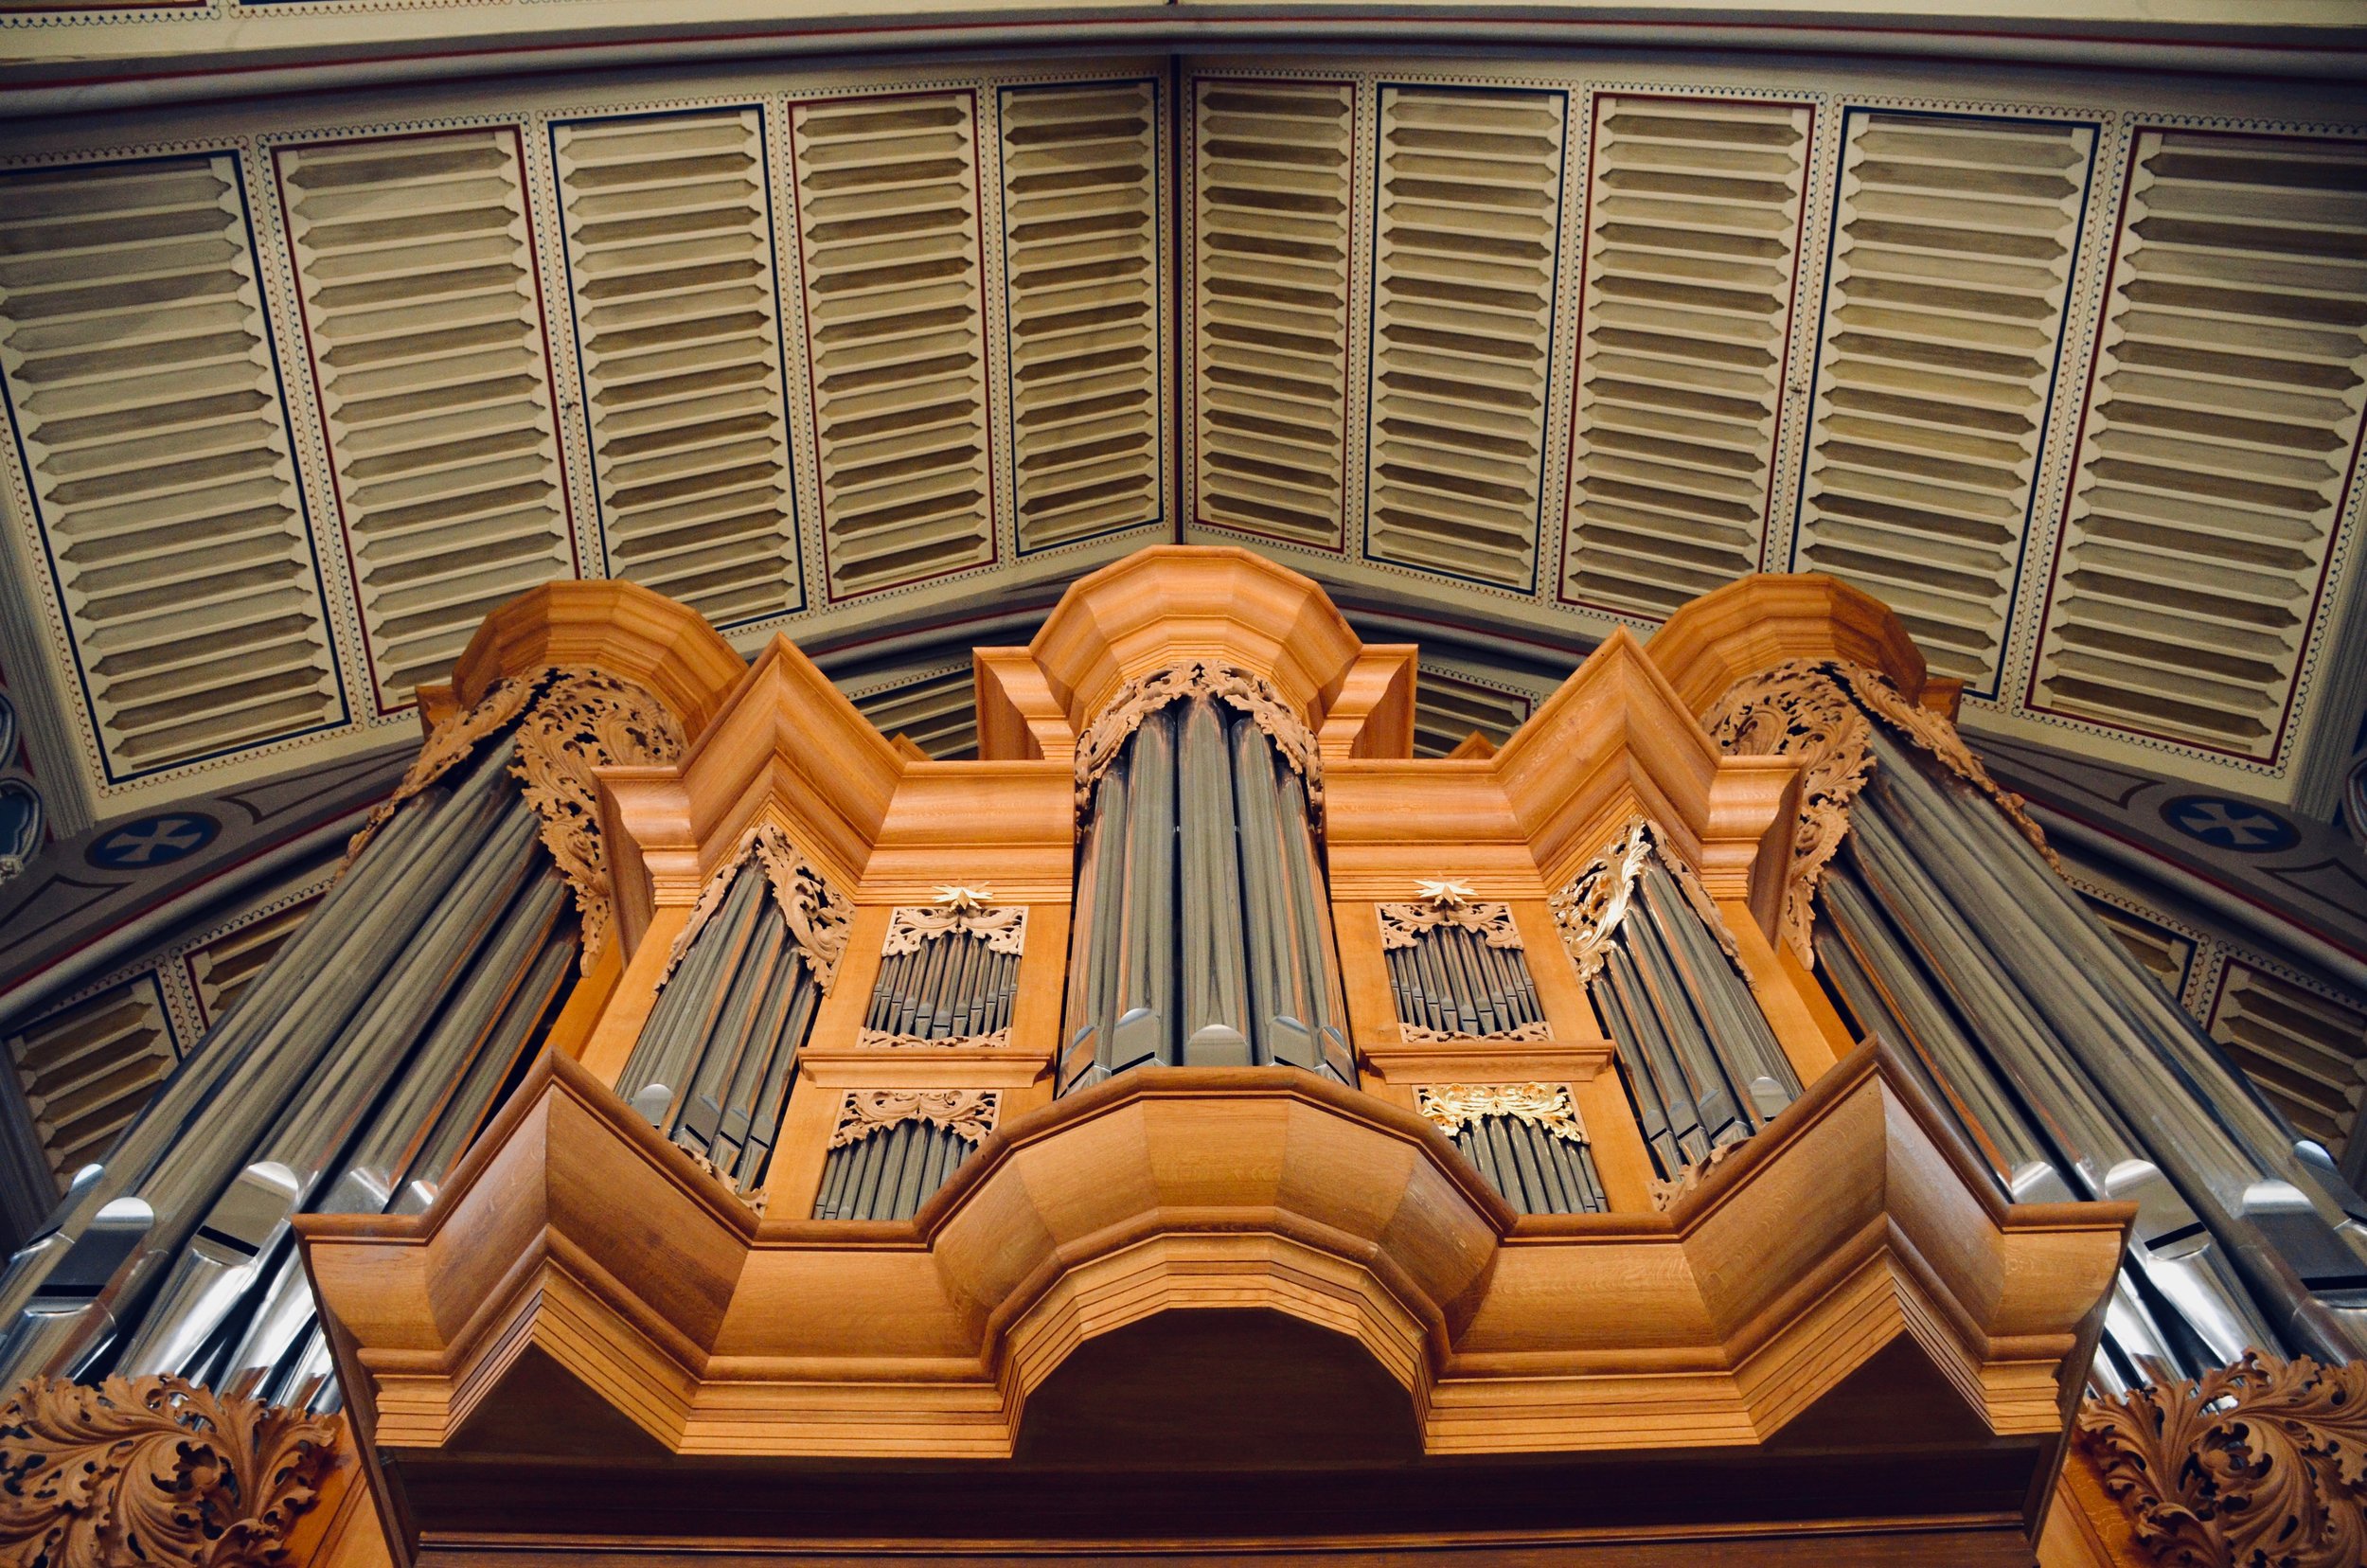  2000 GoART North German Baroque Research Organ in Örgryte New Church, Göteborg, Sweden. 